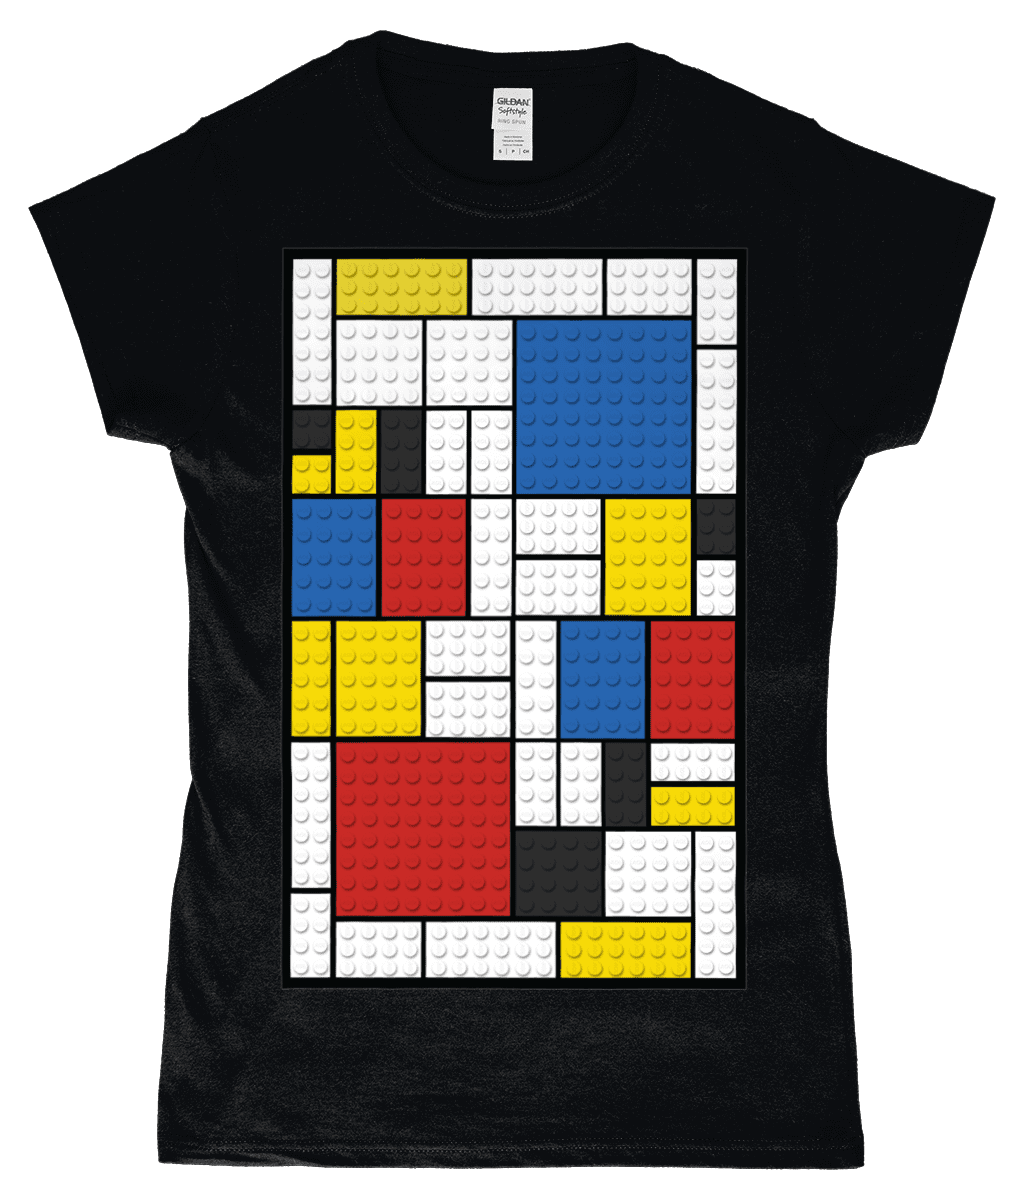 Lego Brick Mondrian Art Painting Women's T-Shirt Black